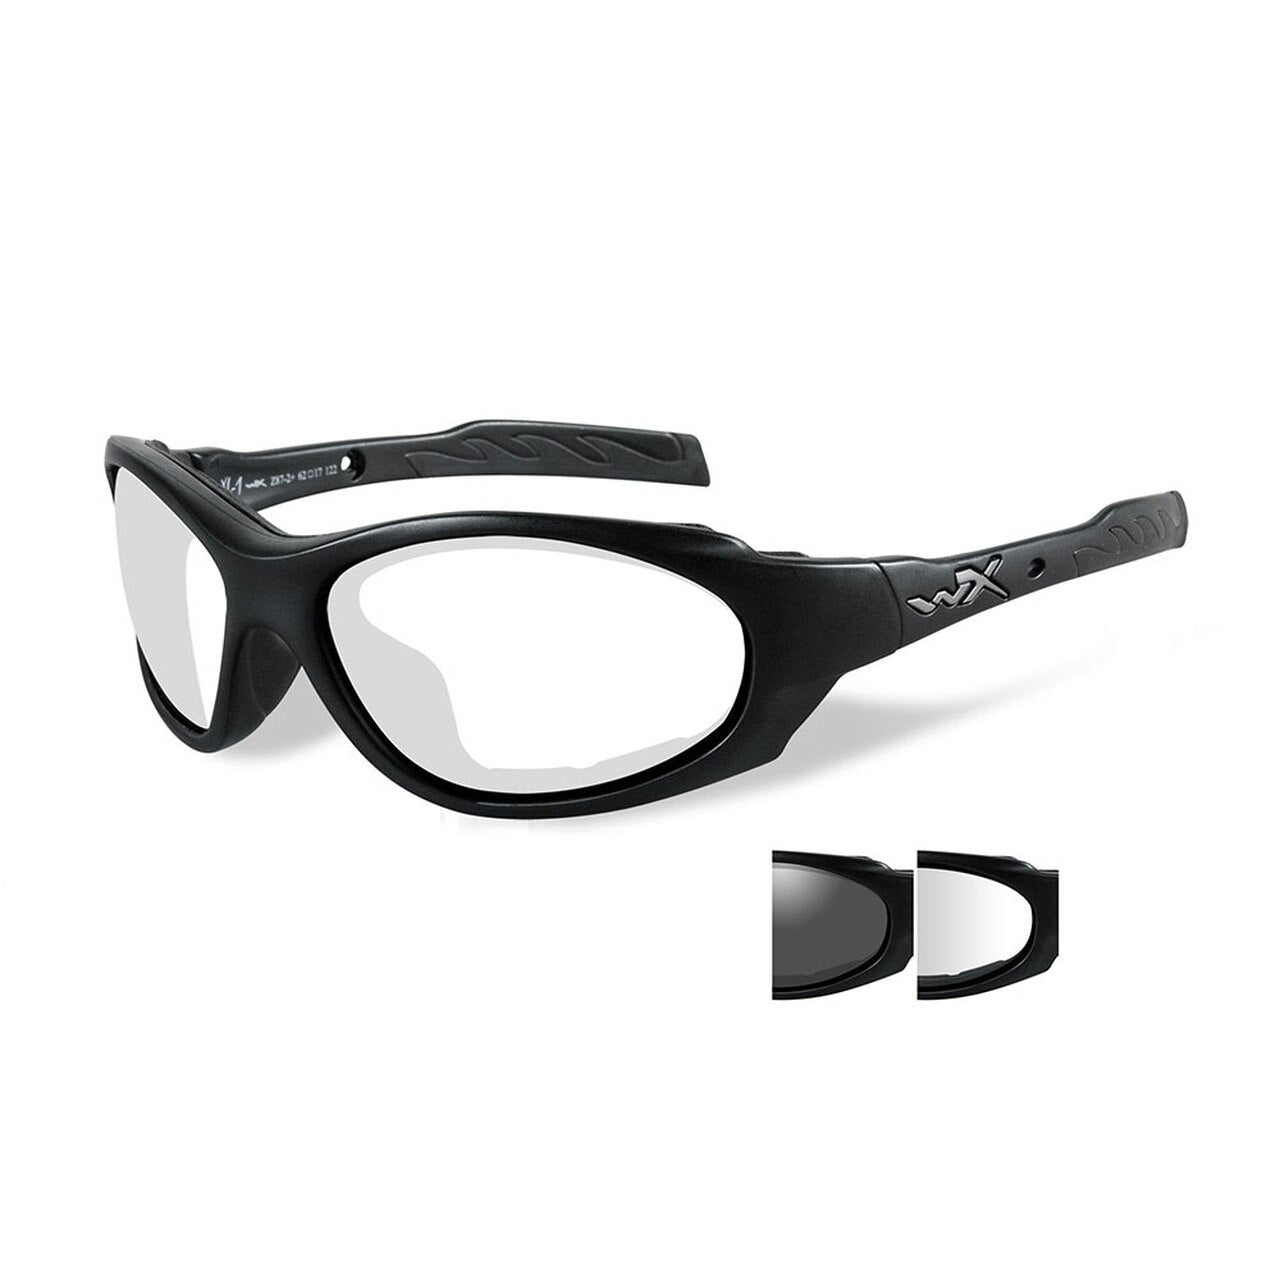 Wiley X XL1 Sunglasses Two Lens Matte Black Frame Eyewear Wiley X Tactical Gear Supplier Tactical Distributors Australia